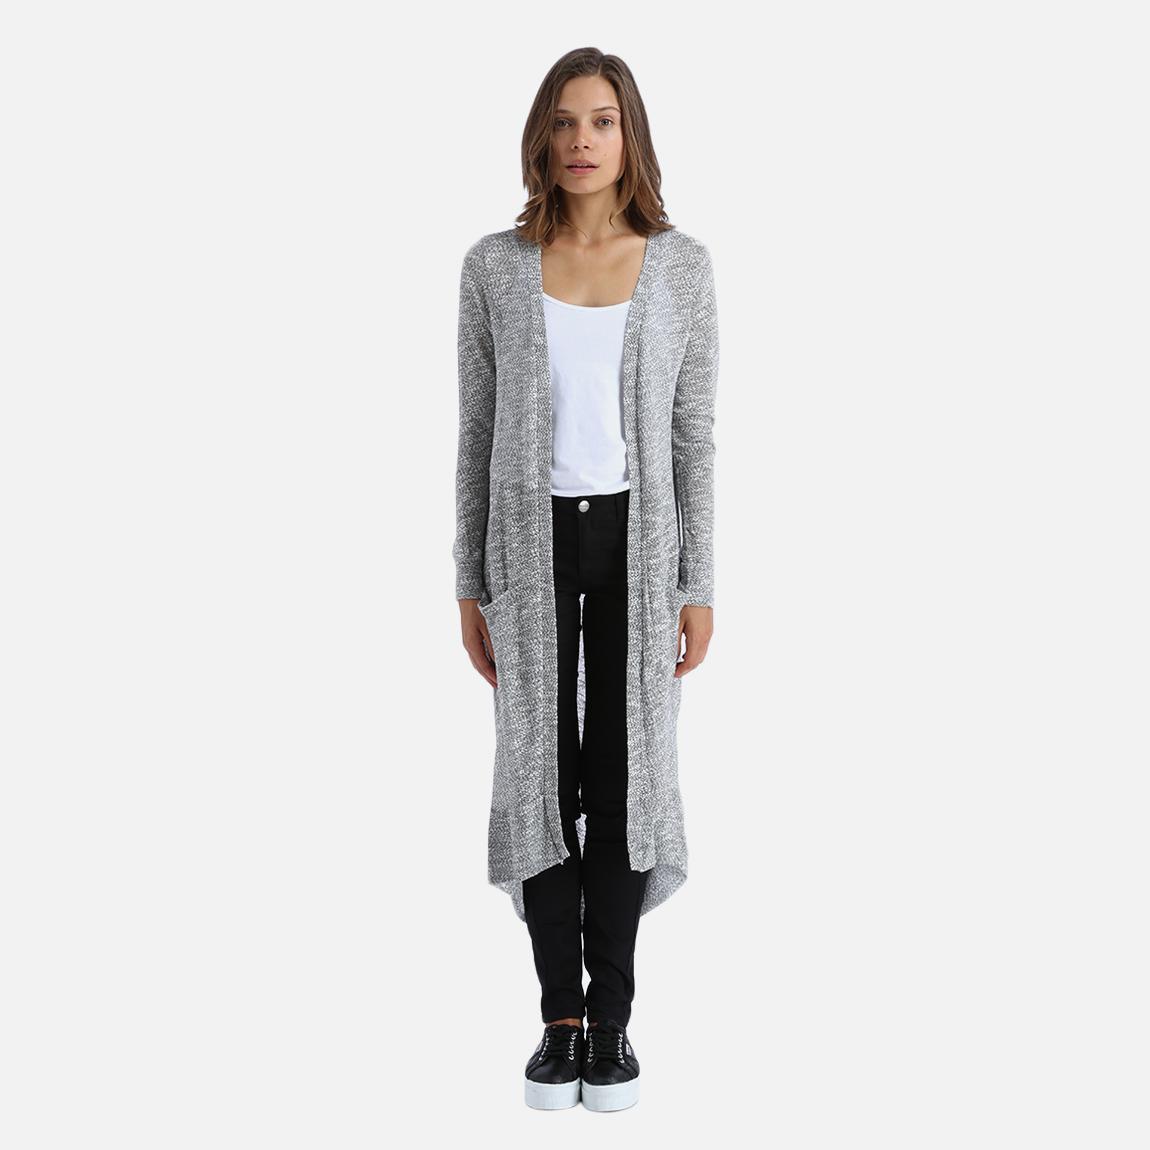 Dusti Long Cardigan - Light Grey Noisy May Knitwear | Superbalist.com